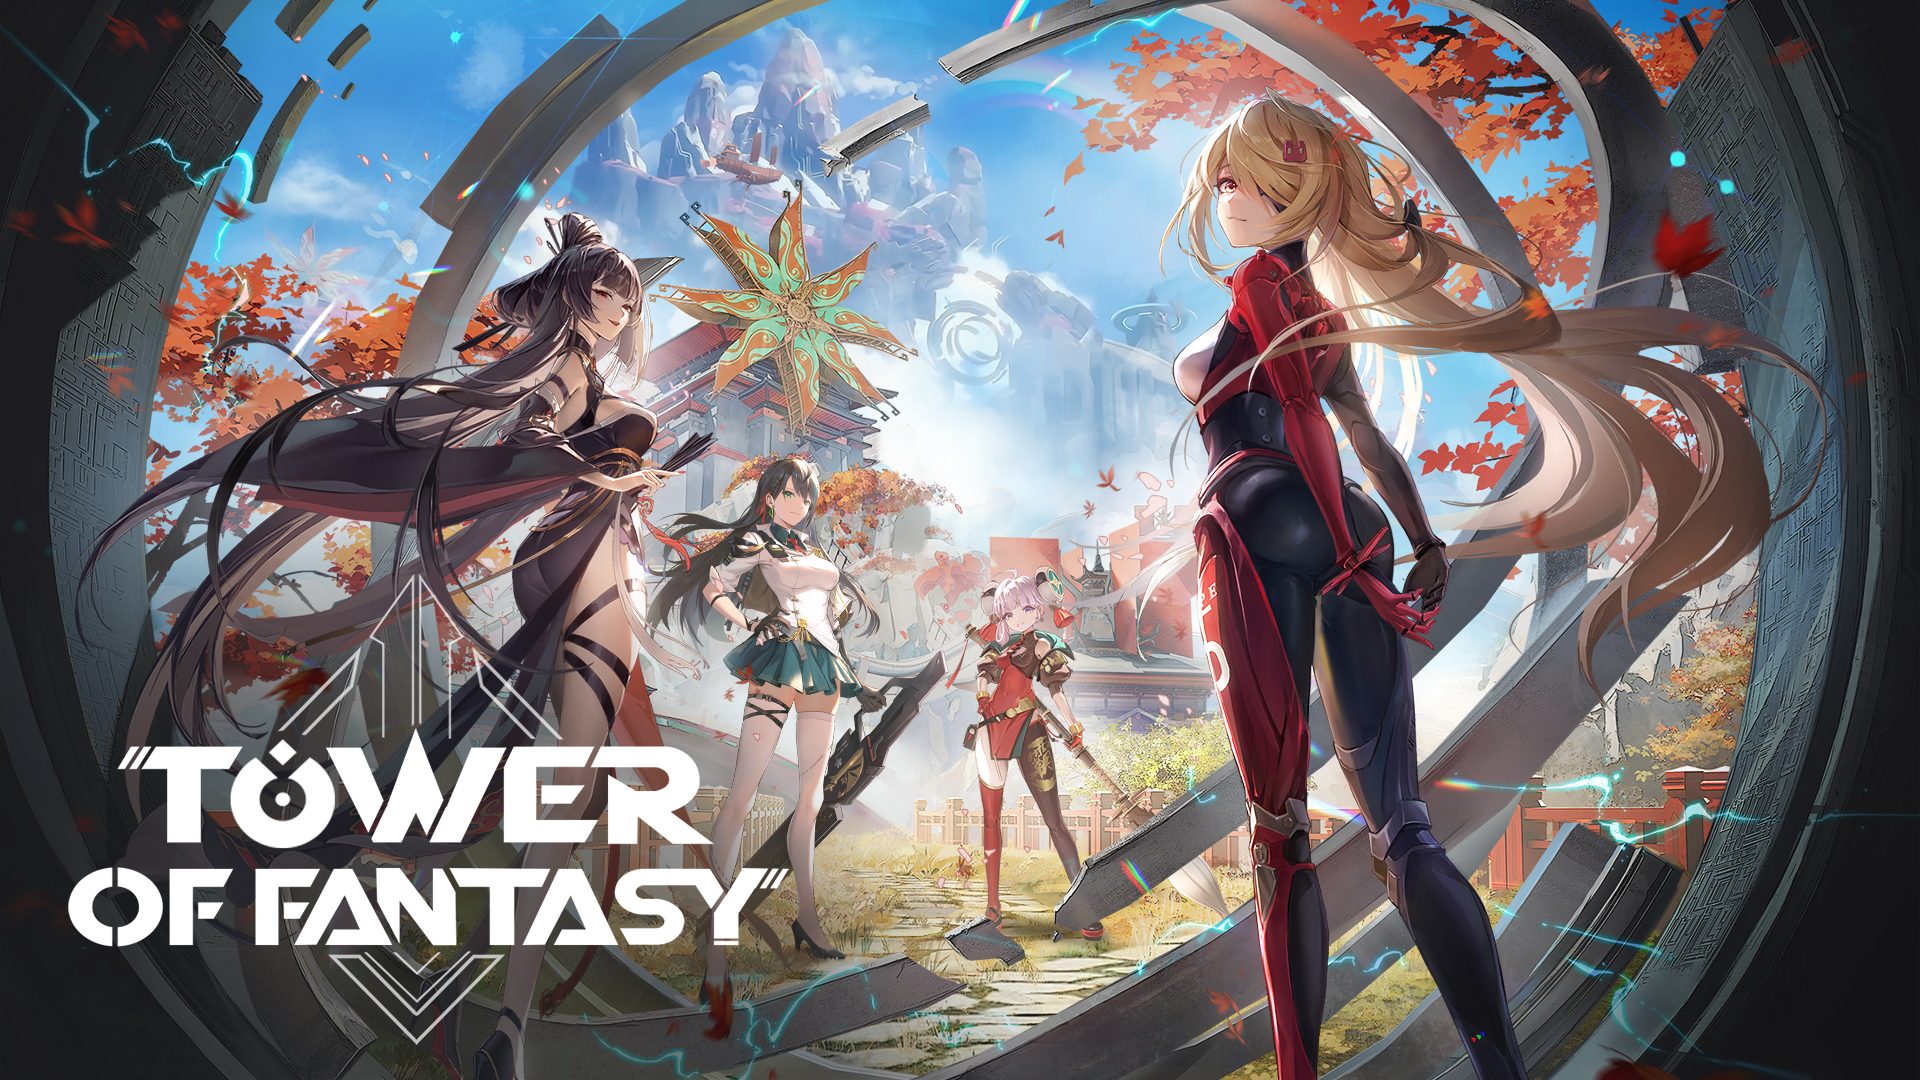 Video Game Tower of Fantasy 8k Ultra HD Wallpaper